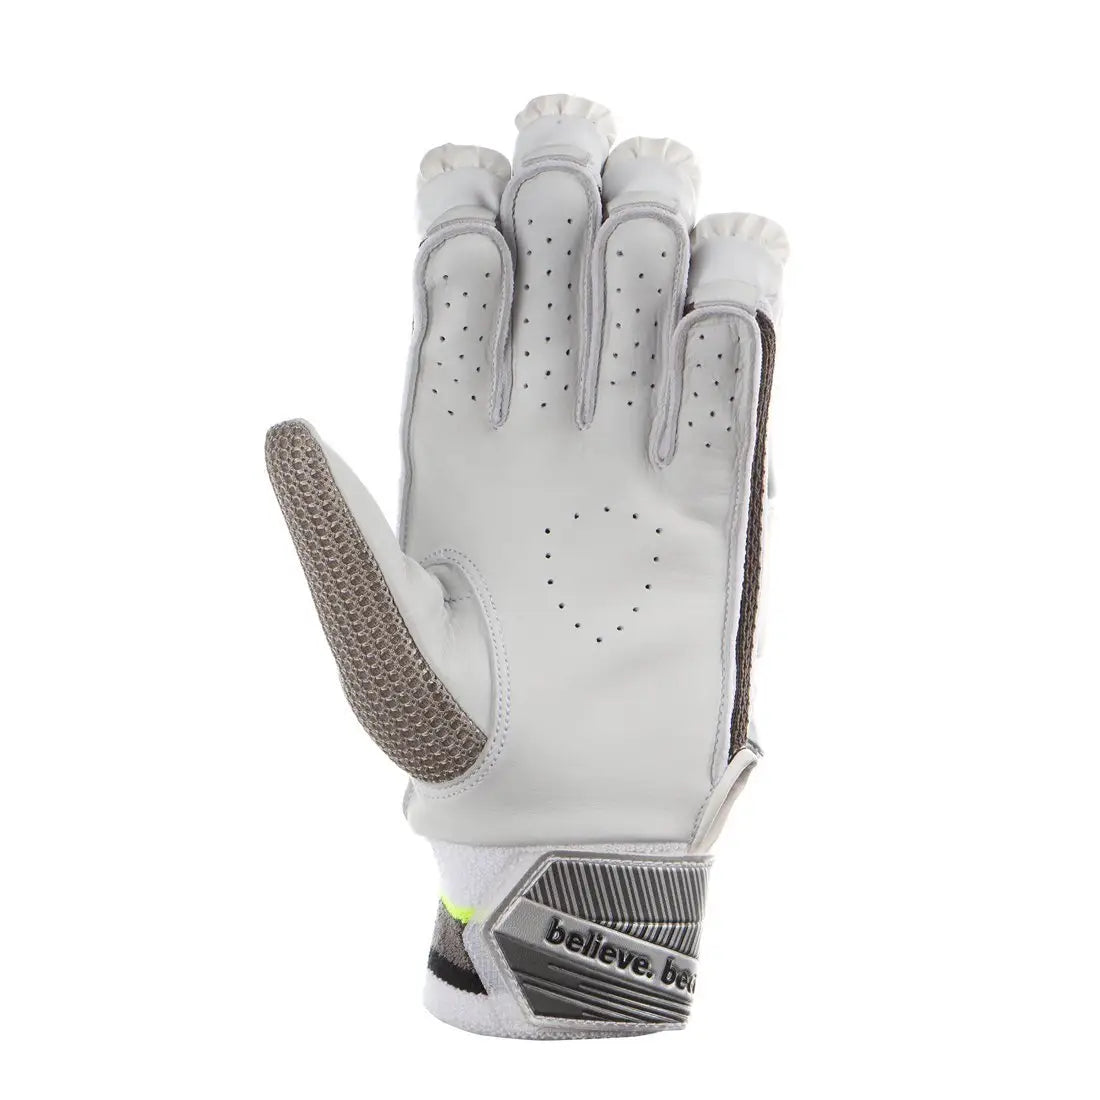 SG Litevate Cricket Batting Gloves High Quality Leather Palm - Boy RH - GLOVE - BATTING